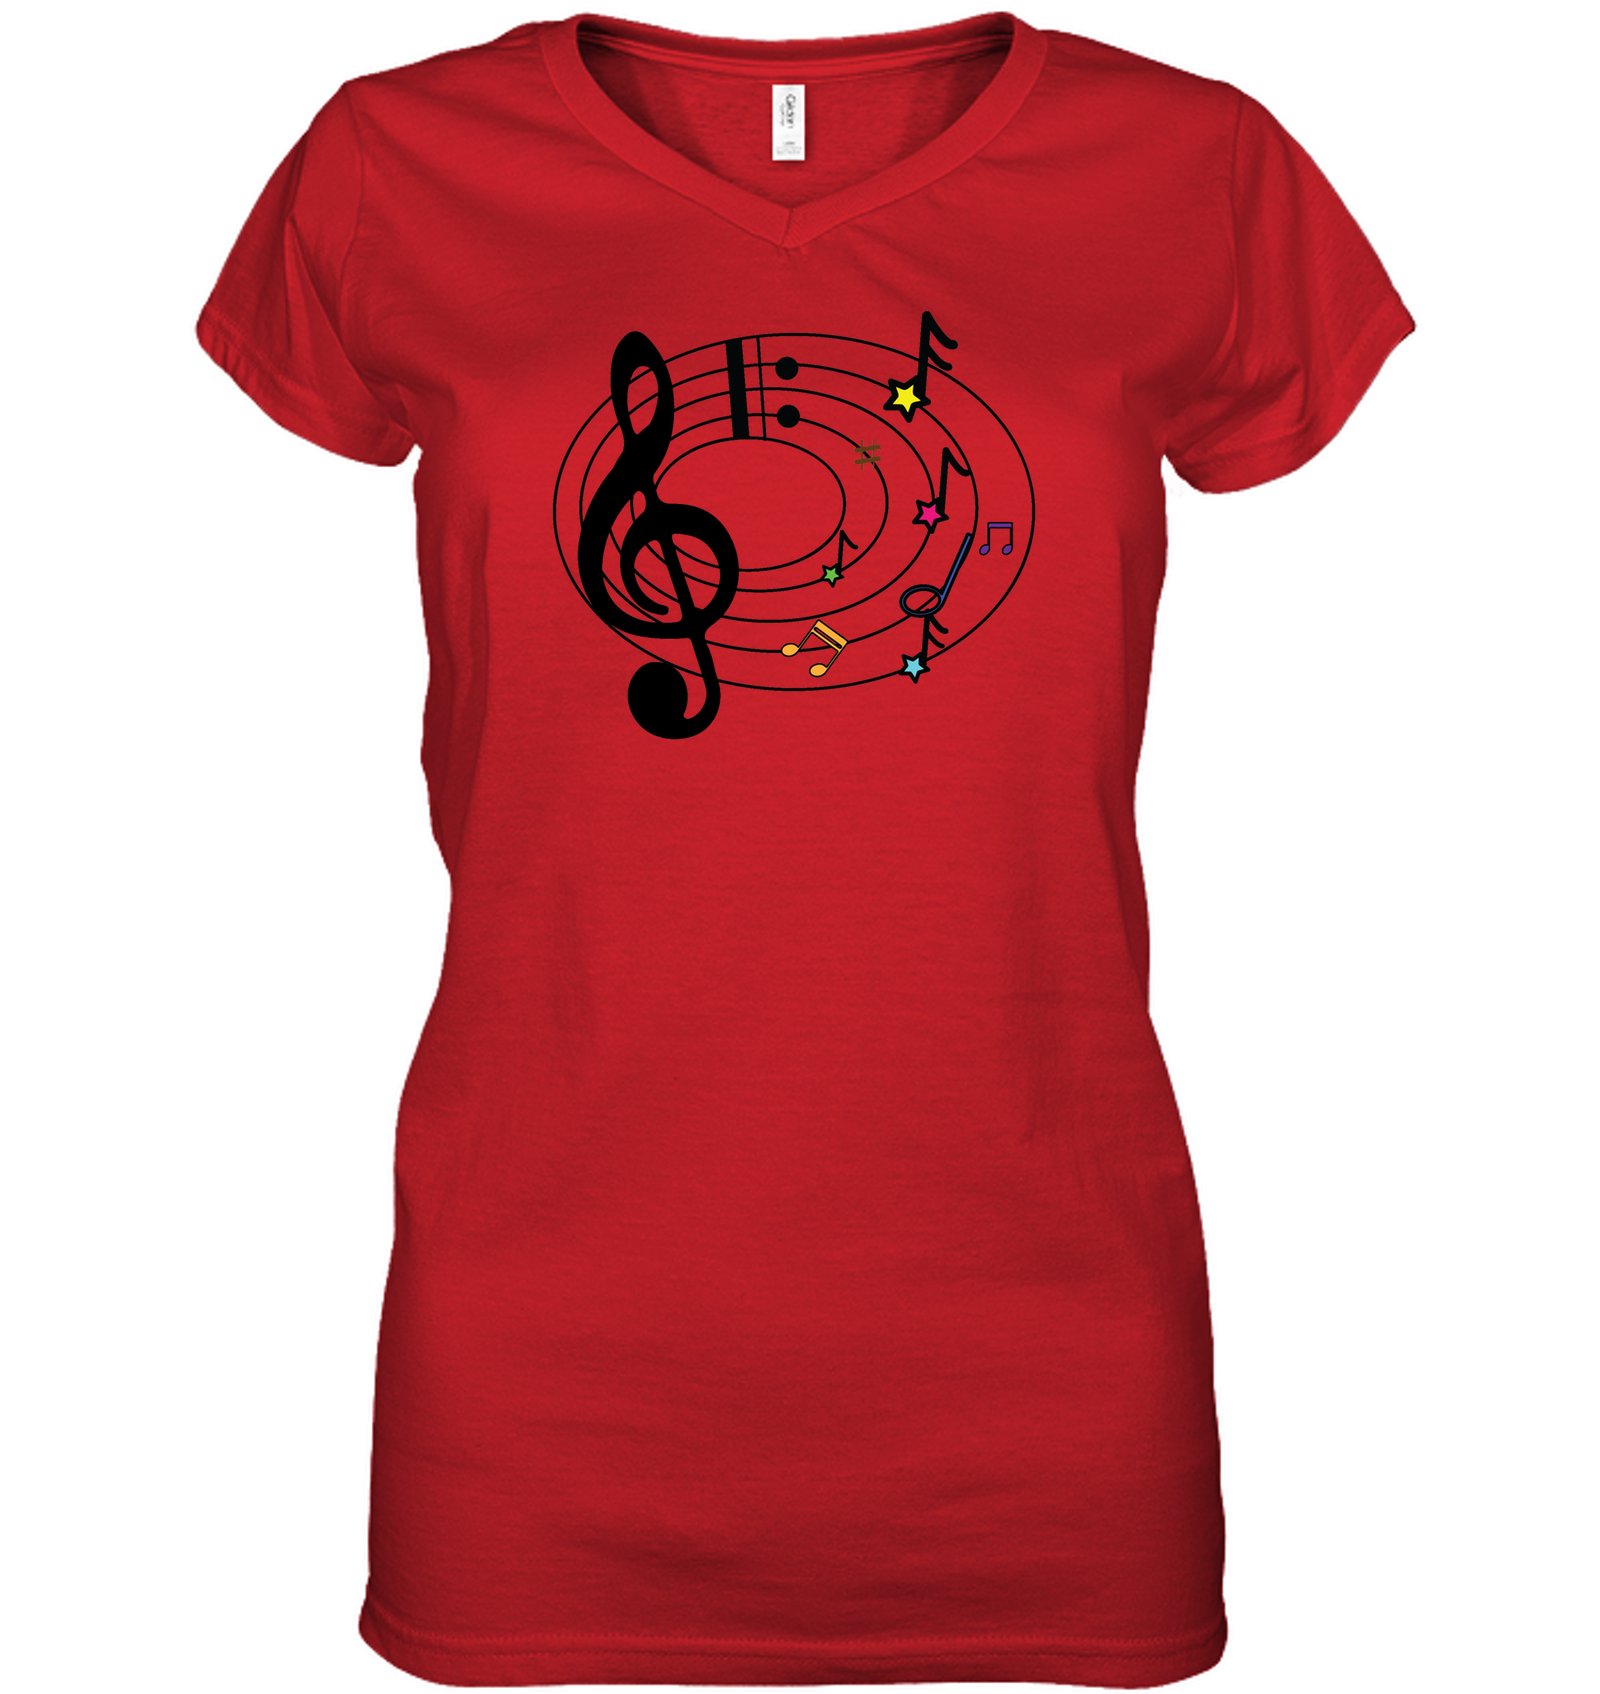 Musical Notes Spiral - Hanes Women's Nano-T® V-Neck T-Shirt